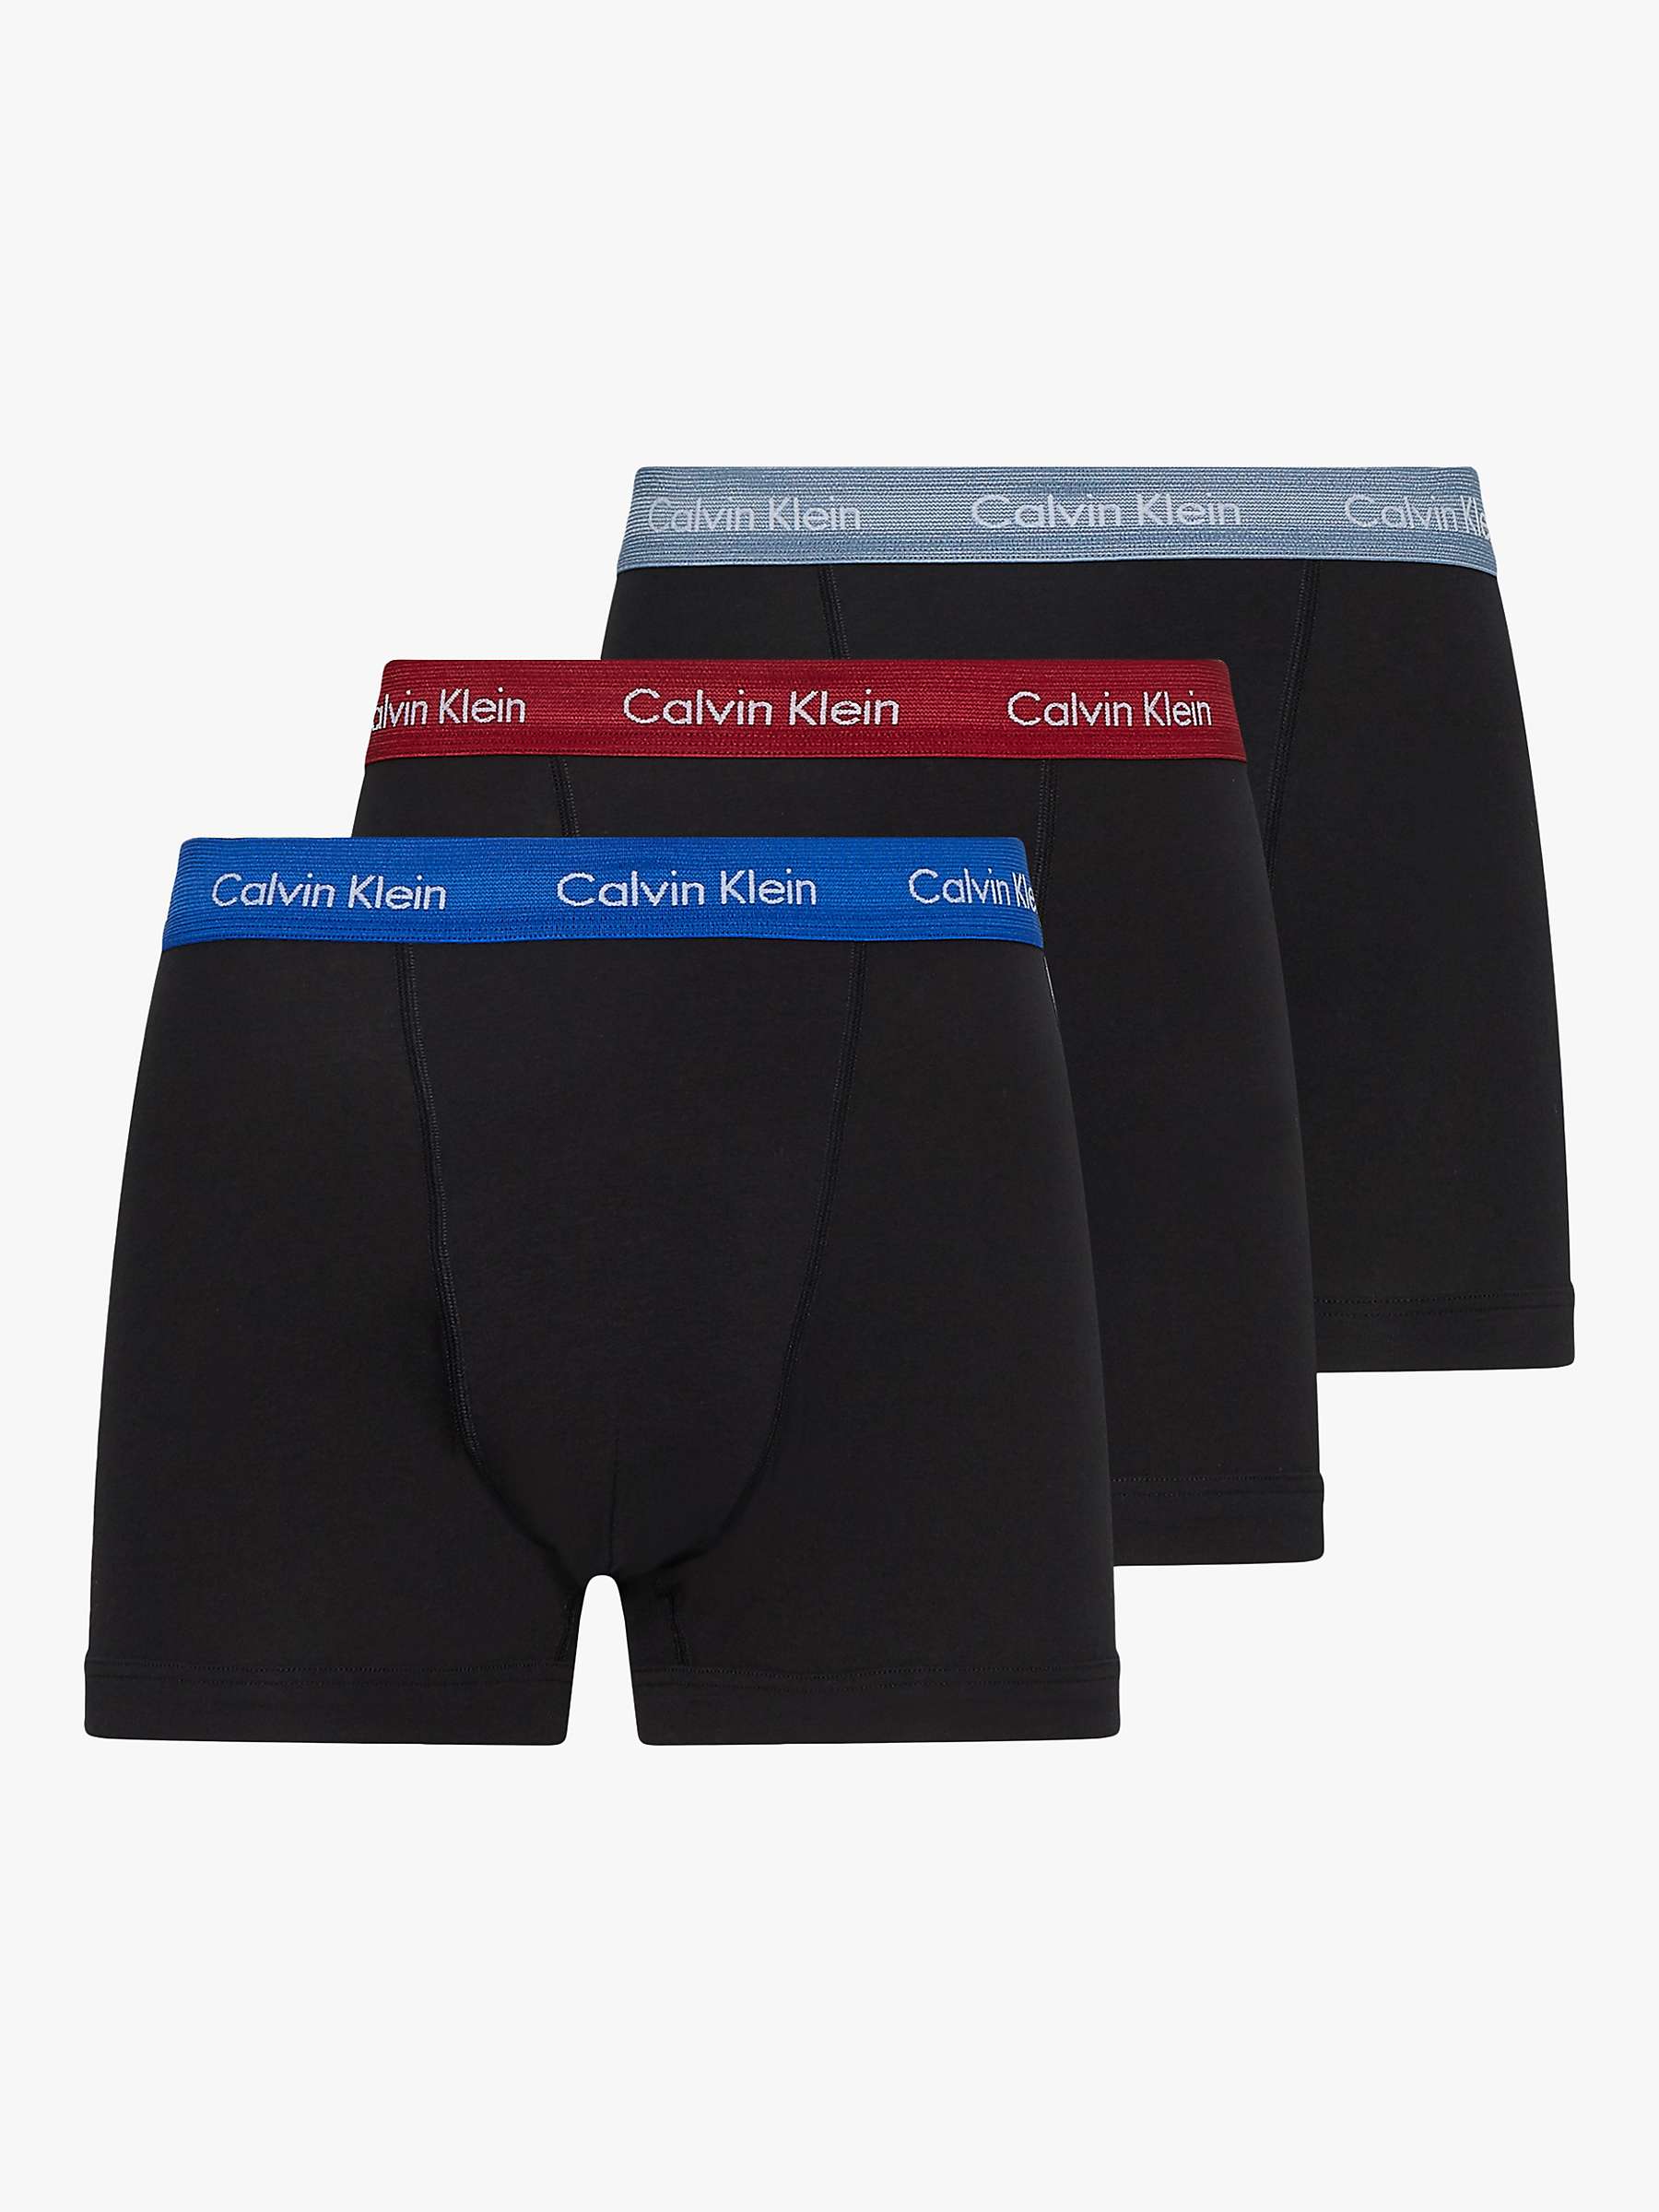 Calvin Klein Regular Cotton Stretch Trunks, Pack of 3, Black/Cobalt ...